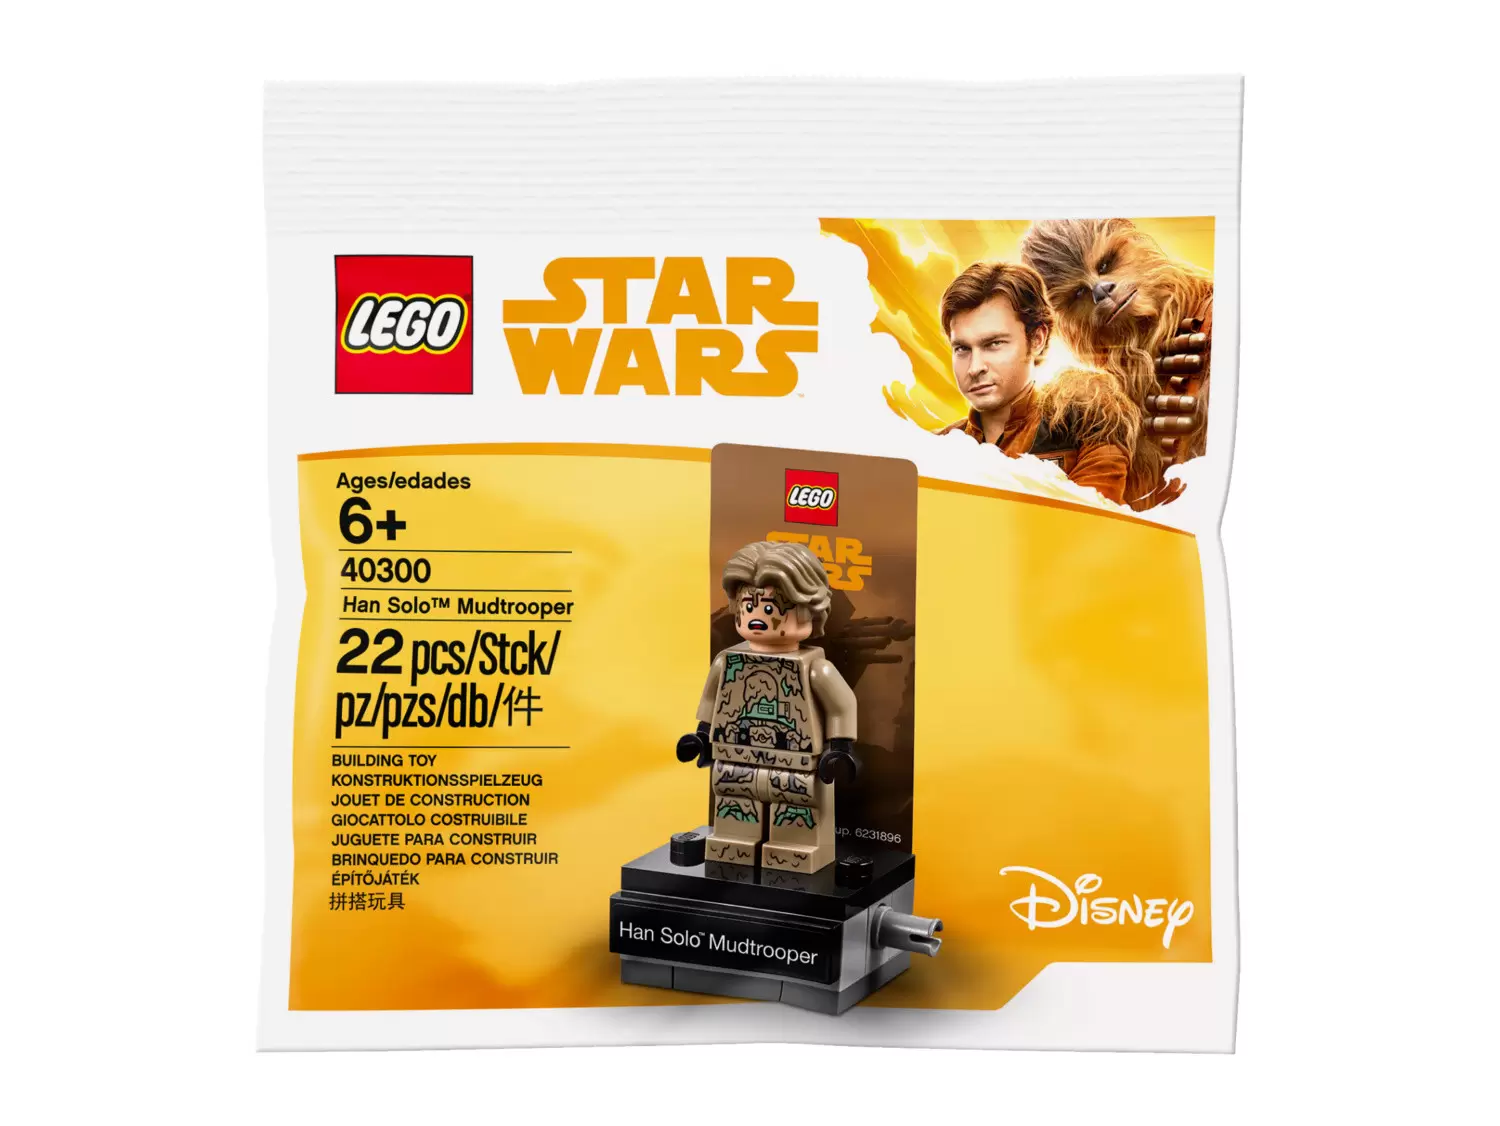 LEGO Star Wars - Han Solo Mudtrooper